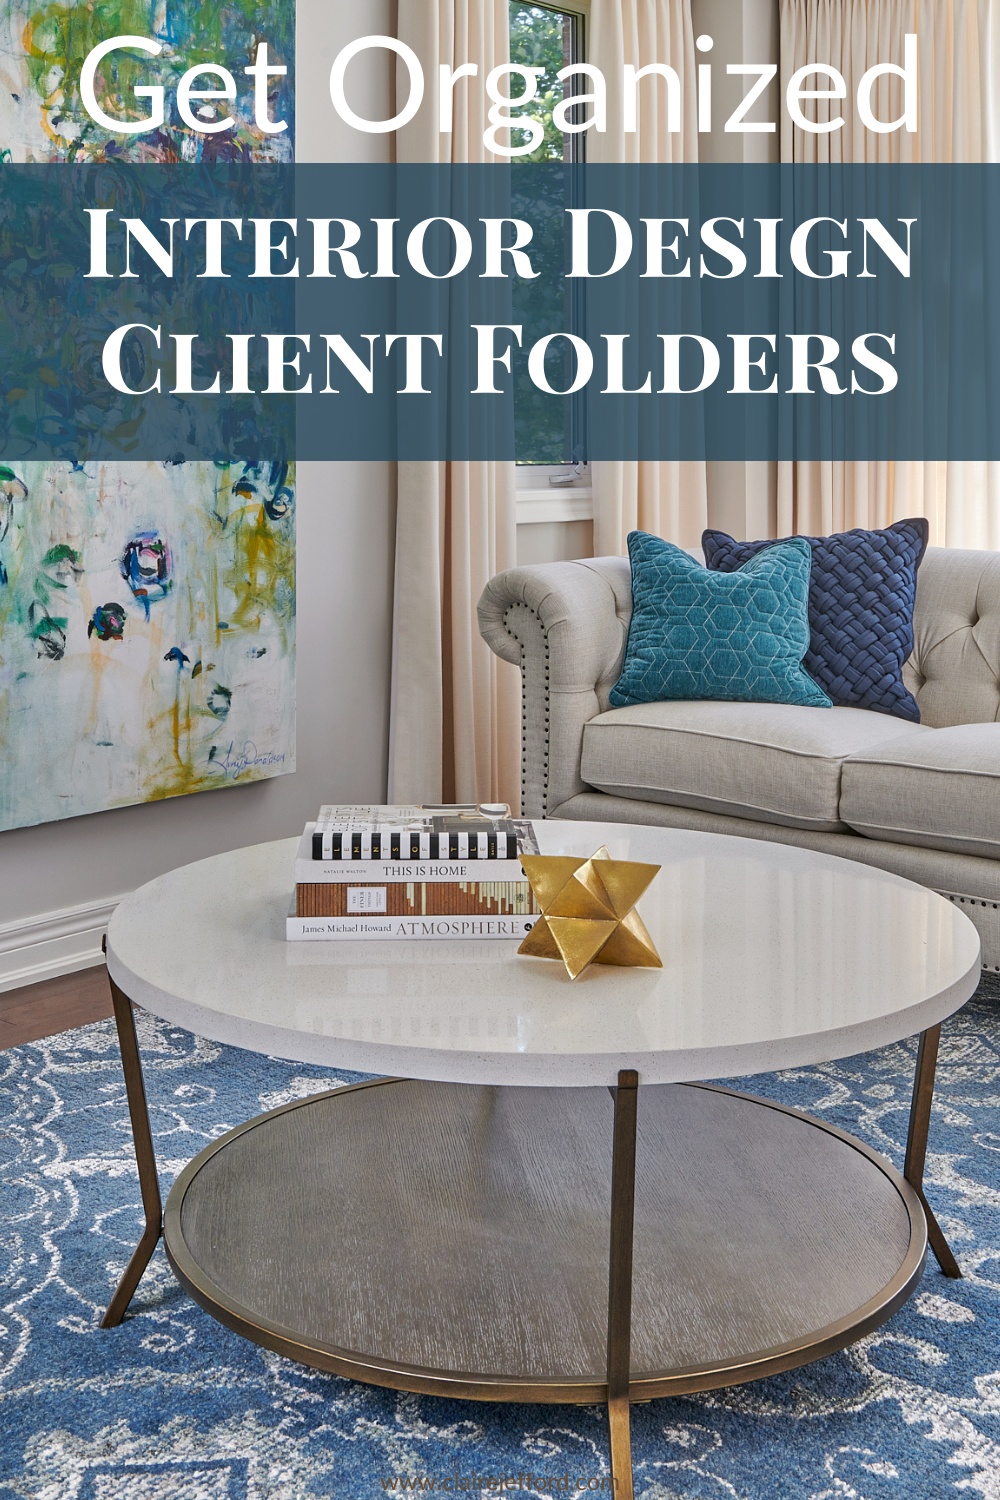 Interior Designers
Get Organized
Client Folders